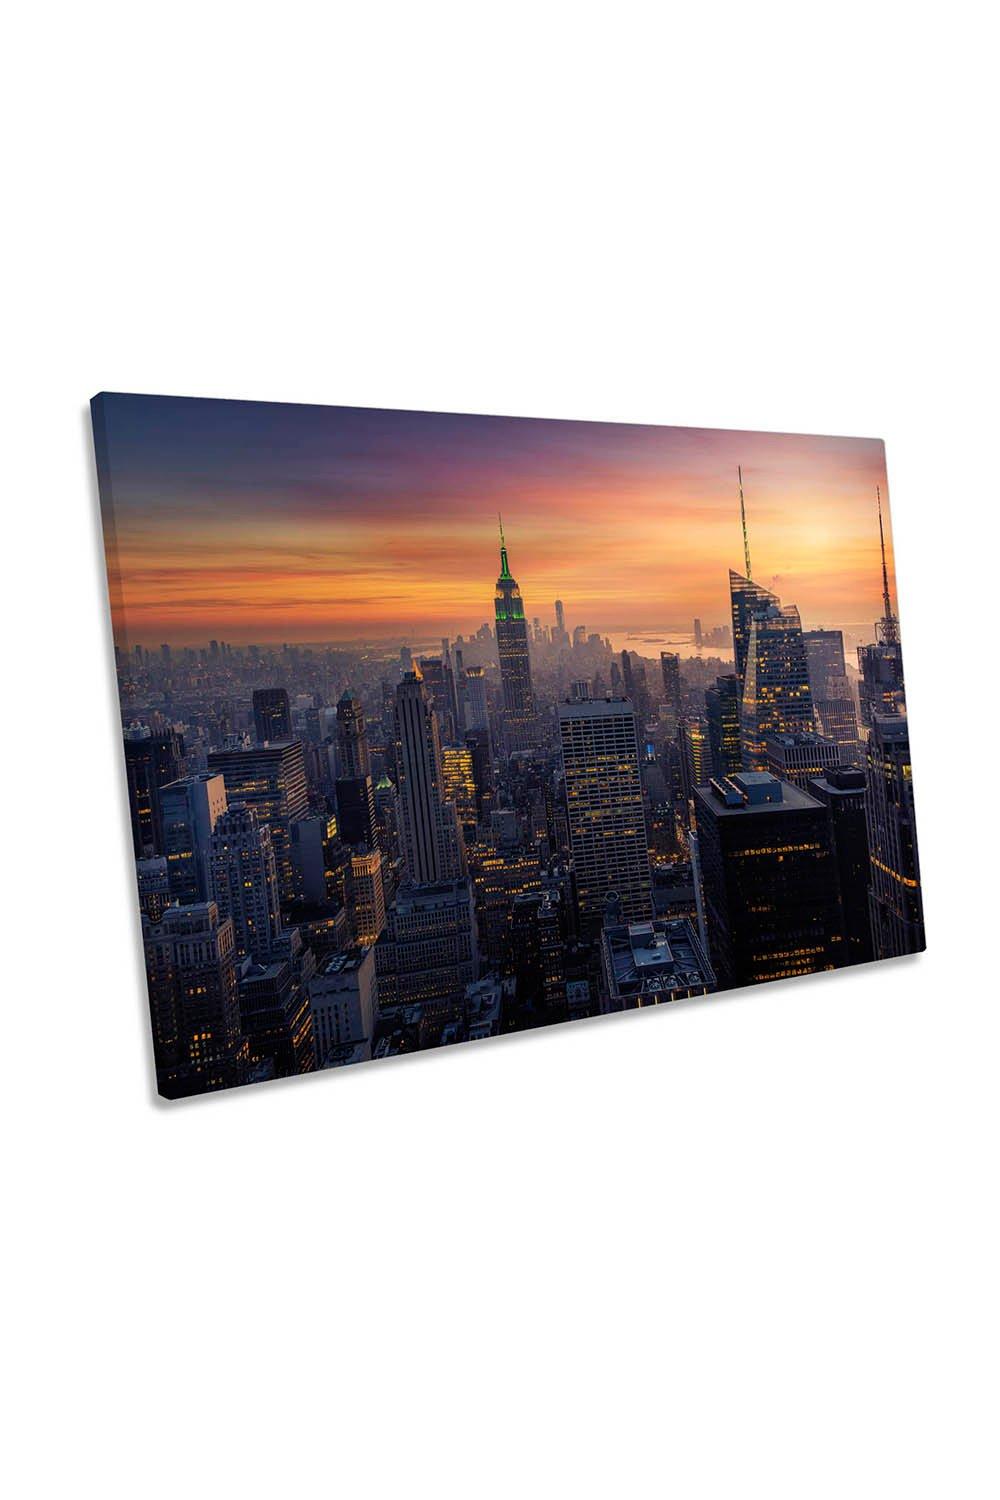 Big Apple New York City Orange Sunset Canvas Wall Art Picture Print